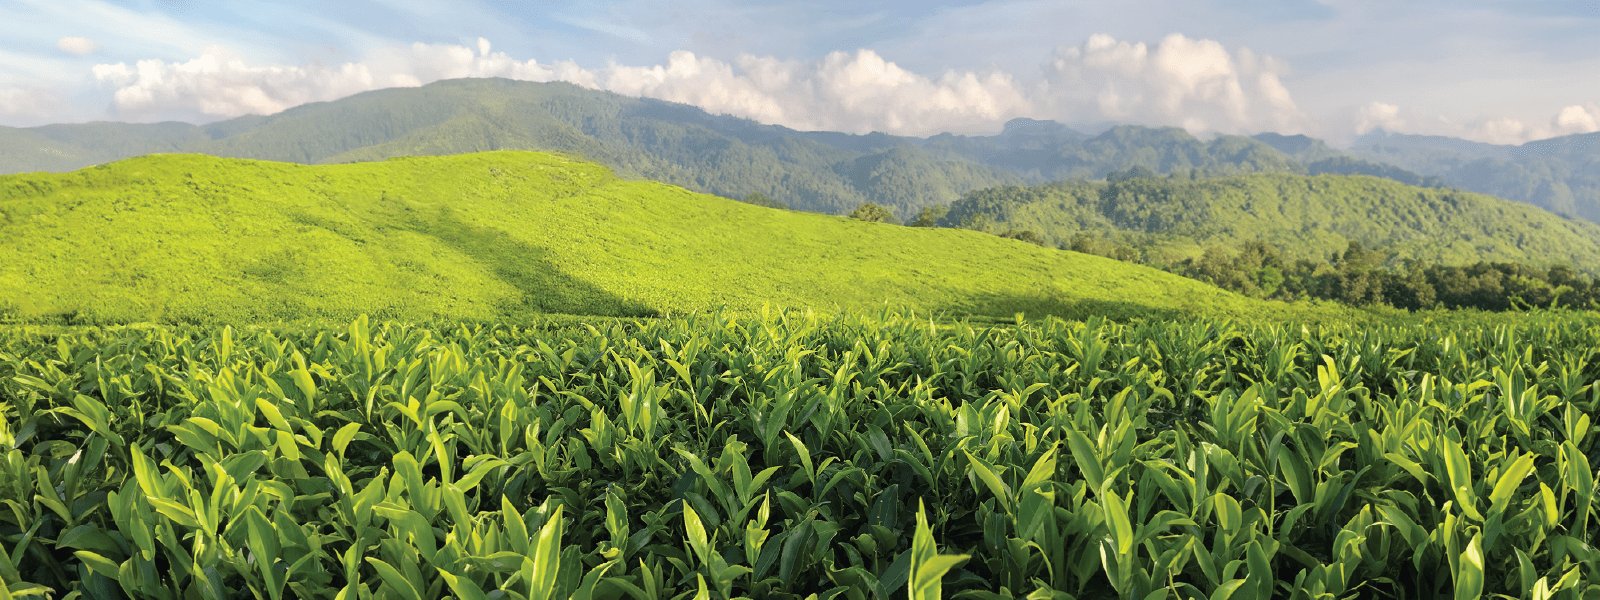 Ceylon Tea - Sri Lanka image